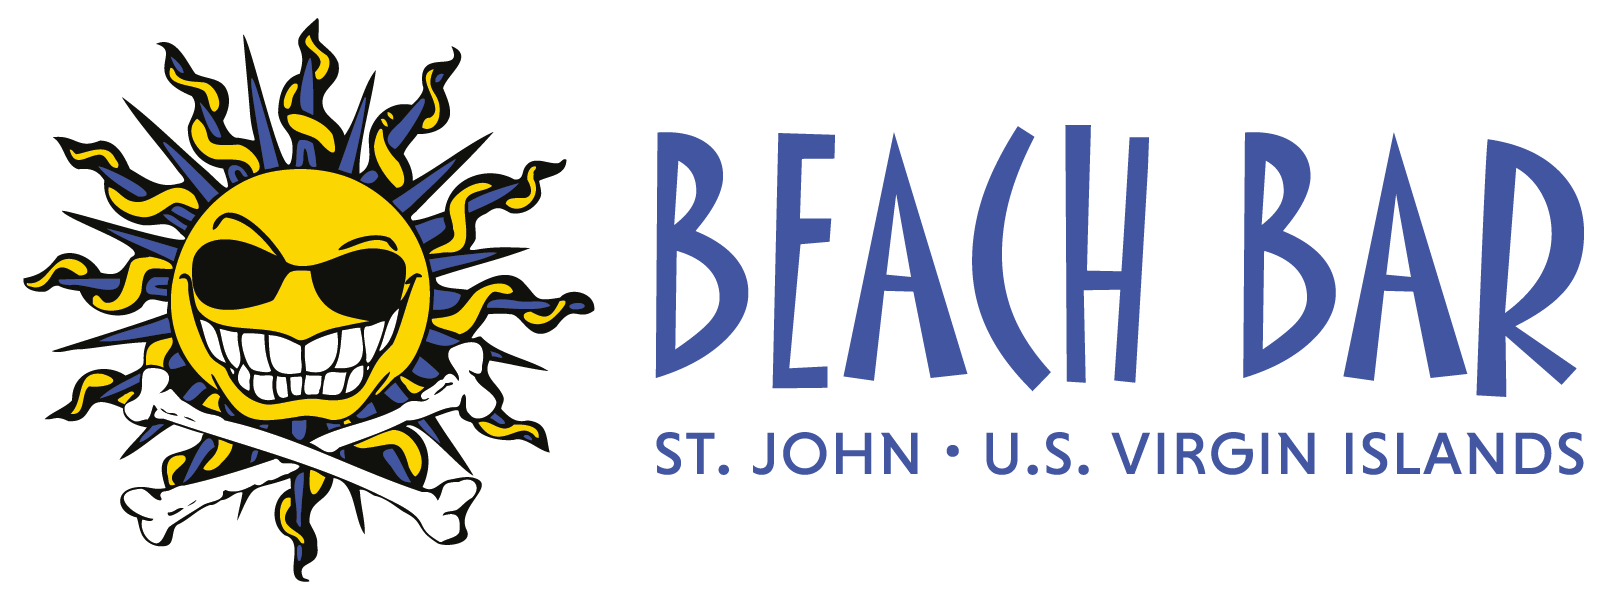 30 oz Beach Bar Insulated Tumbler with lid. – The Beach Bar St. John